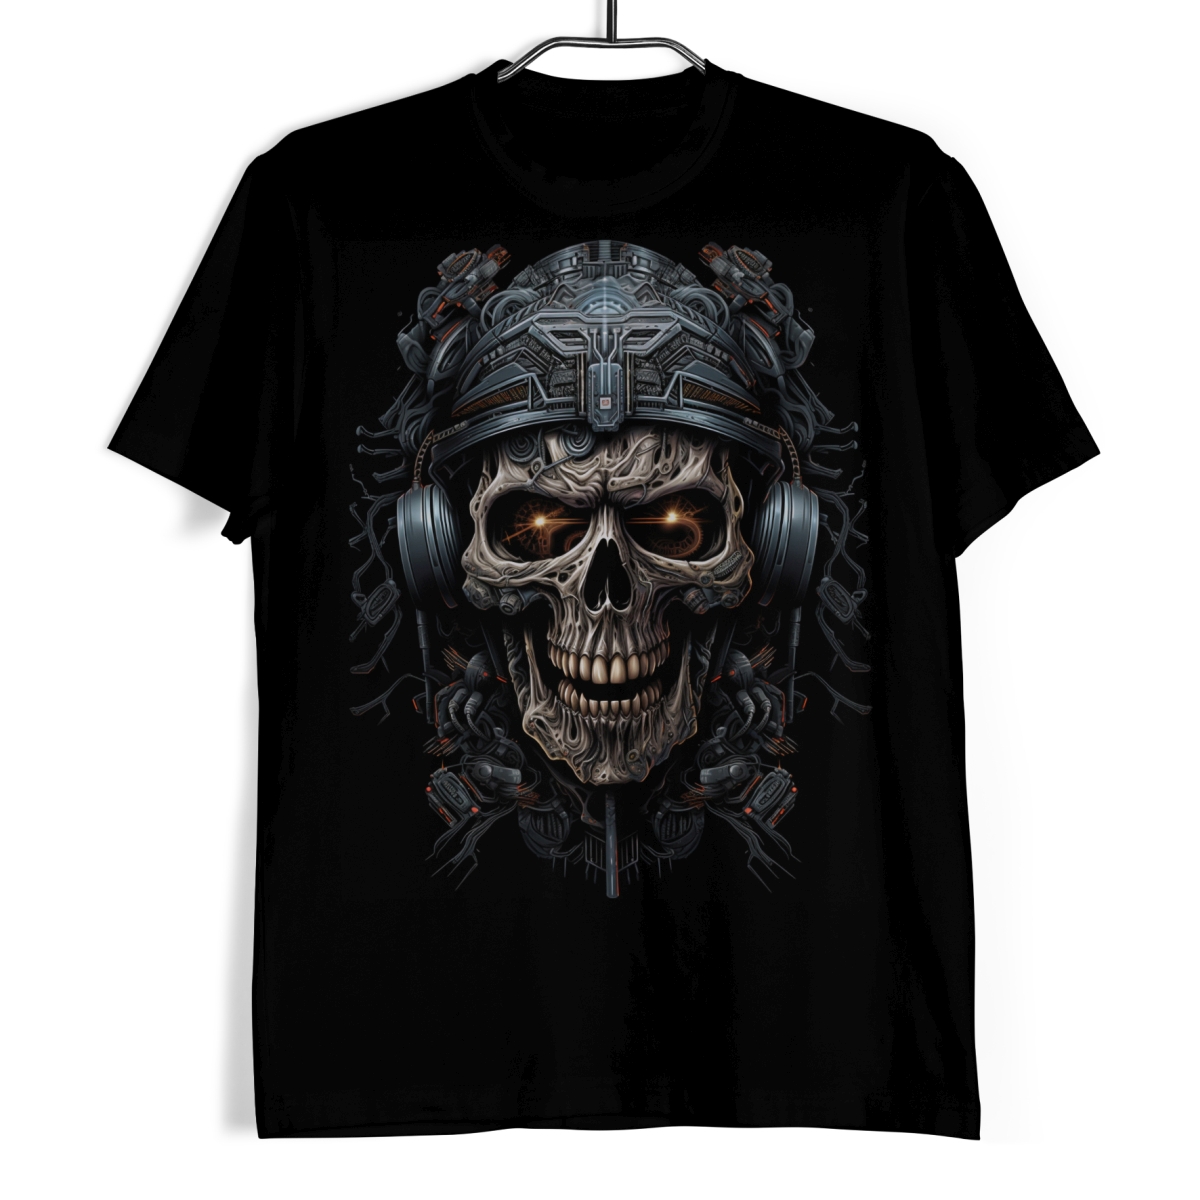 Tričko s lebkou - Cyber Skull Warrior XL